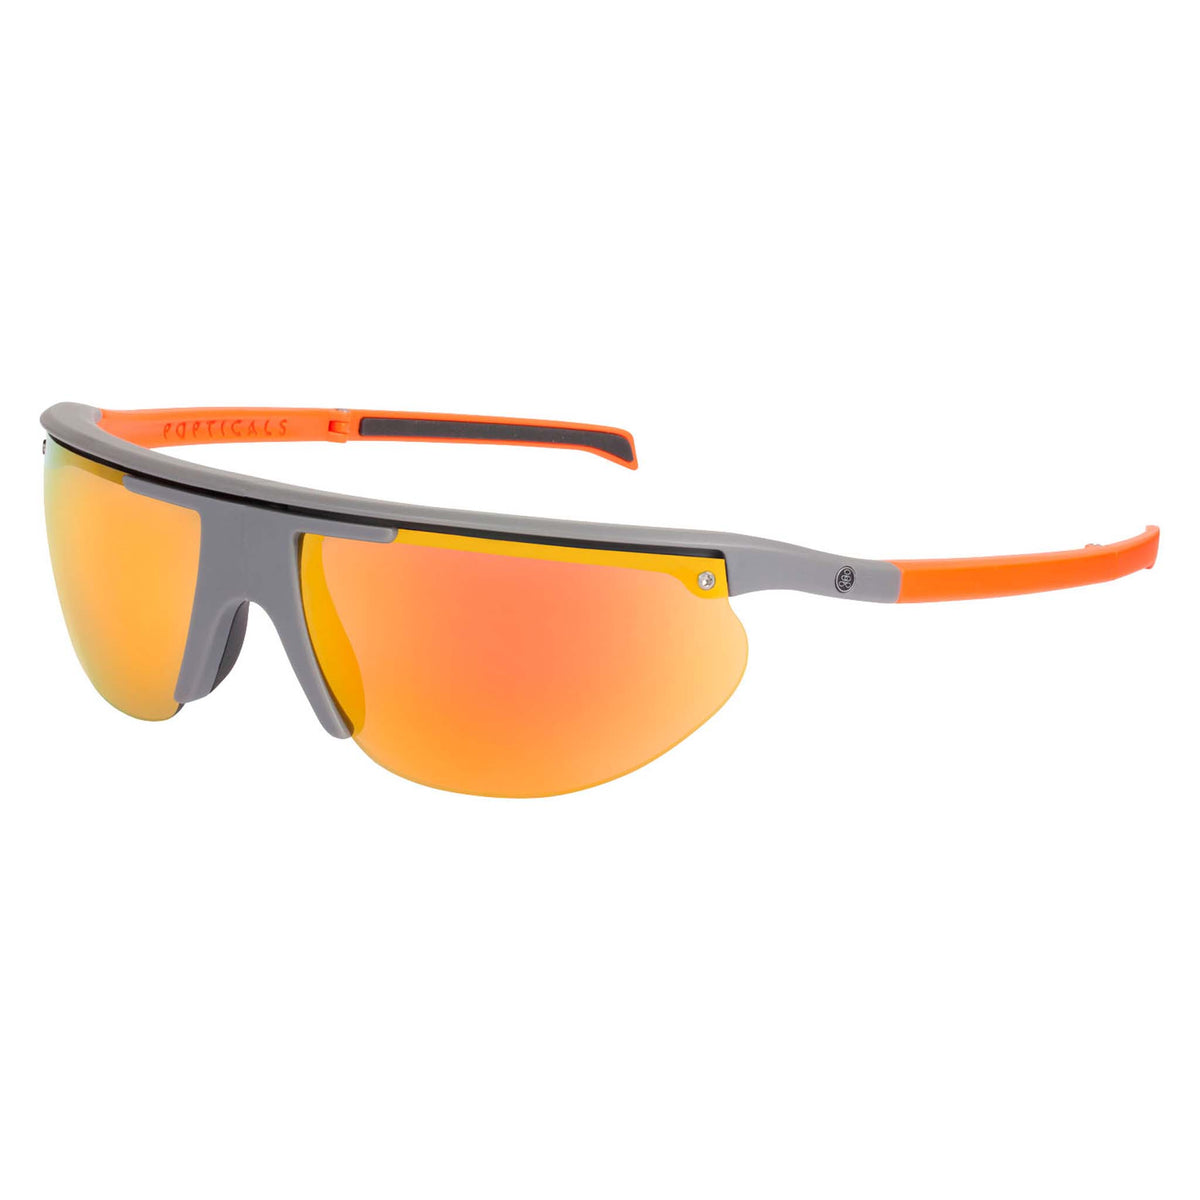 Popticals, Premium Compact Sunglasses, PopTrail, 010081-OMON, Polarized Sunglasses, Matte Gray/Orange Frame, Gray Lenses w/Orange Mirror Finish, Glam View